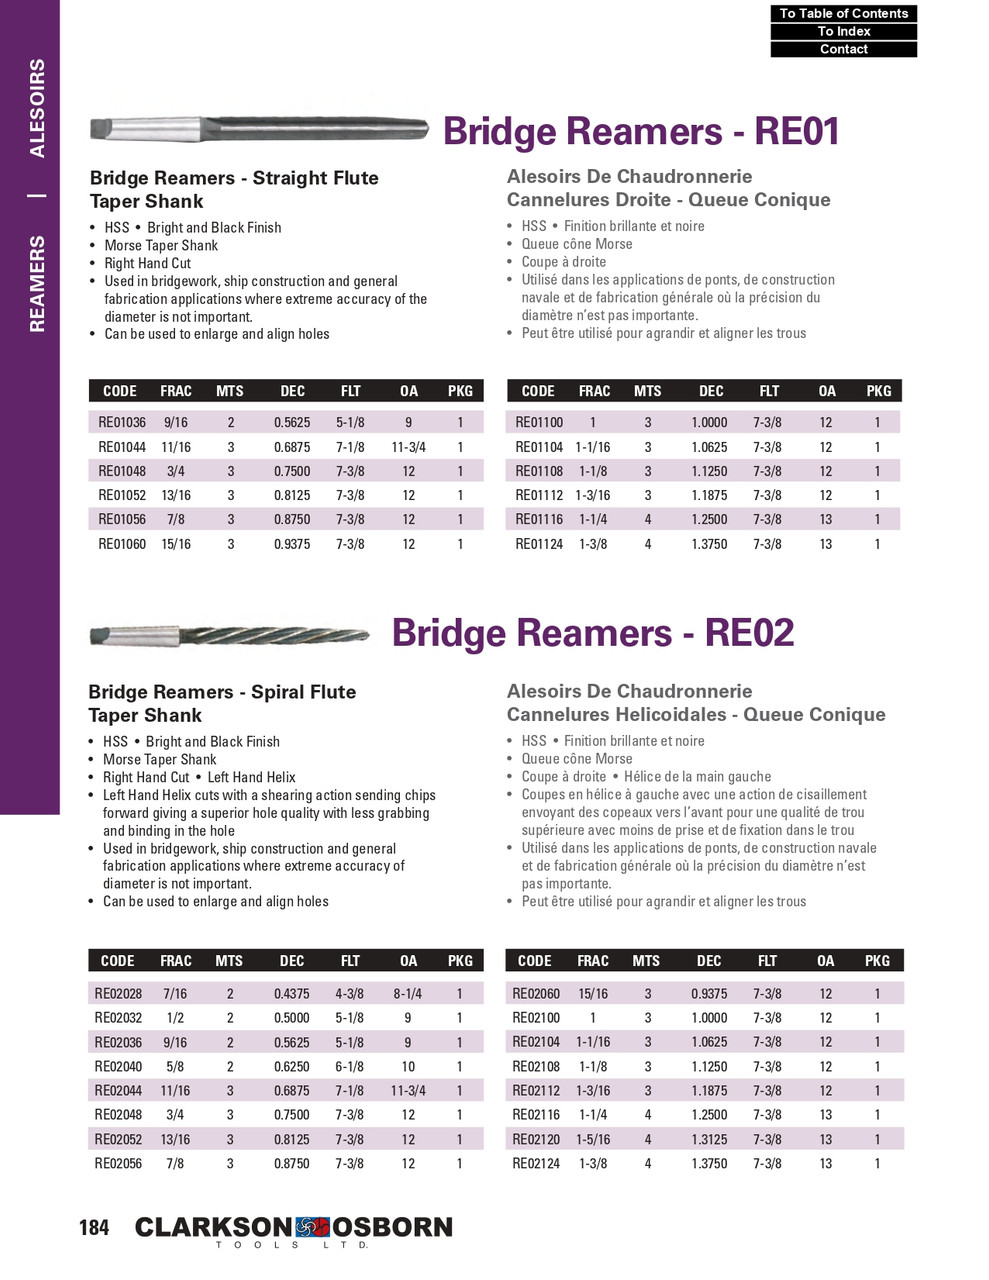 1-1/8" x #3 HSS Morse Taper Bridge Reamer   RE02108